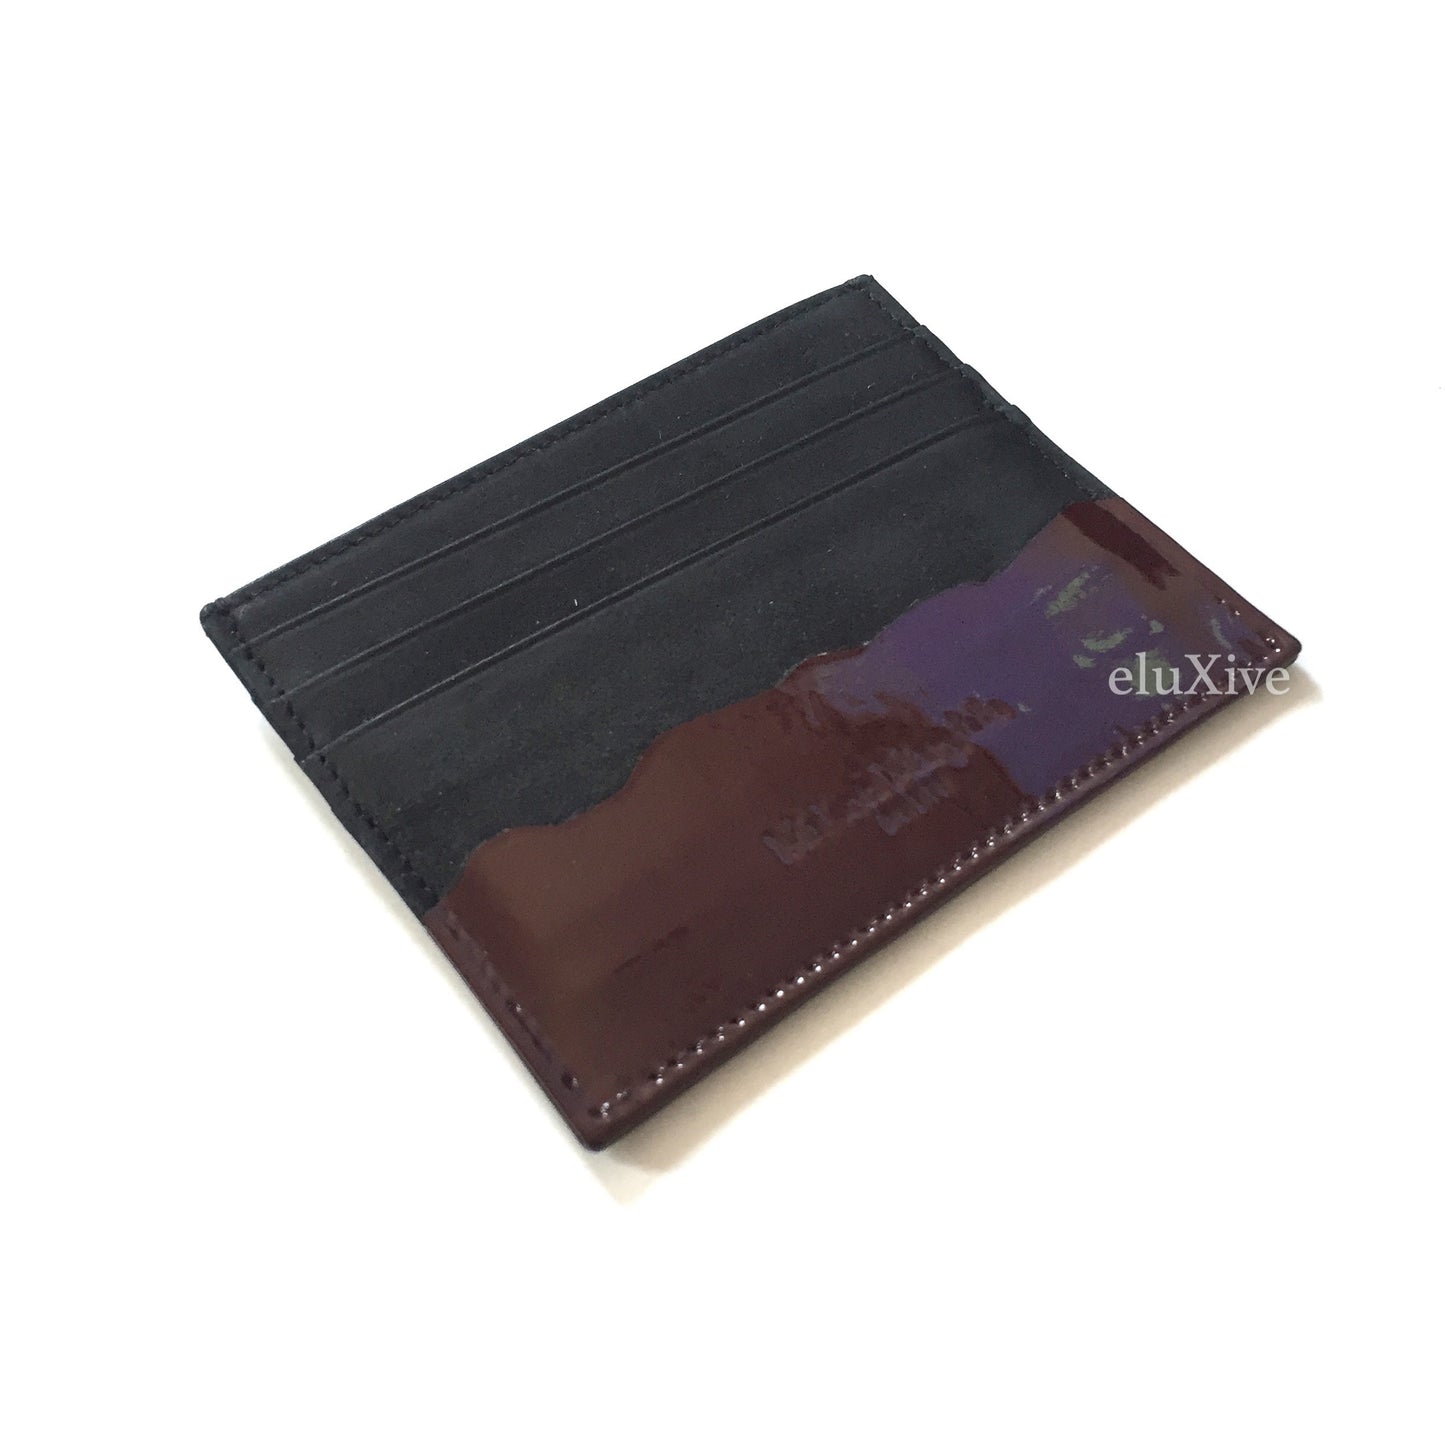 Maison Margiela - Dipped Leather Card Case